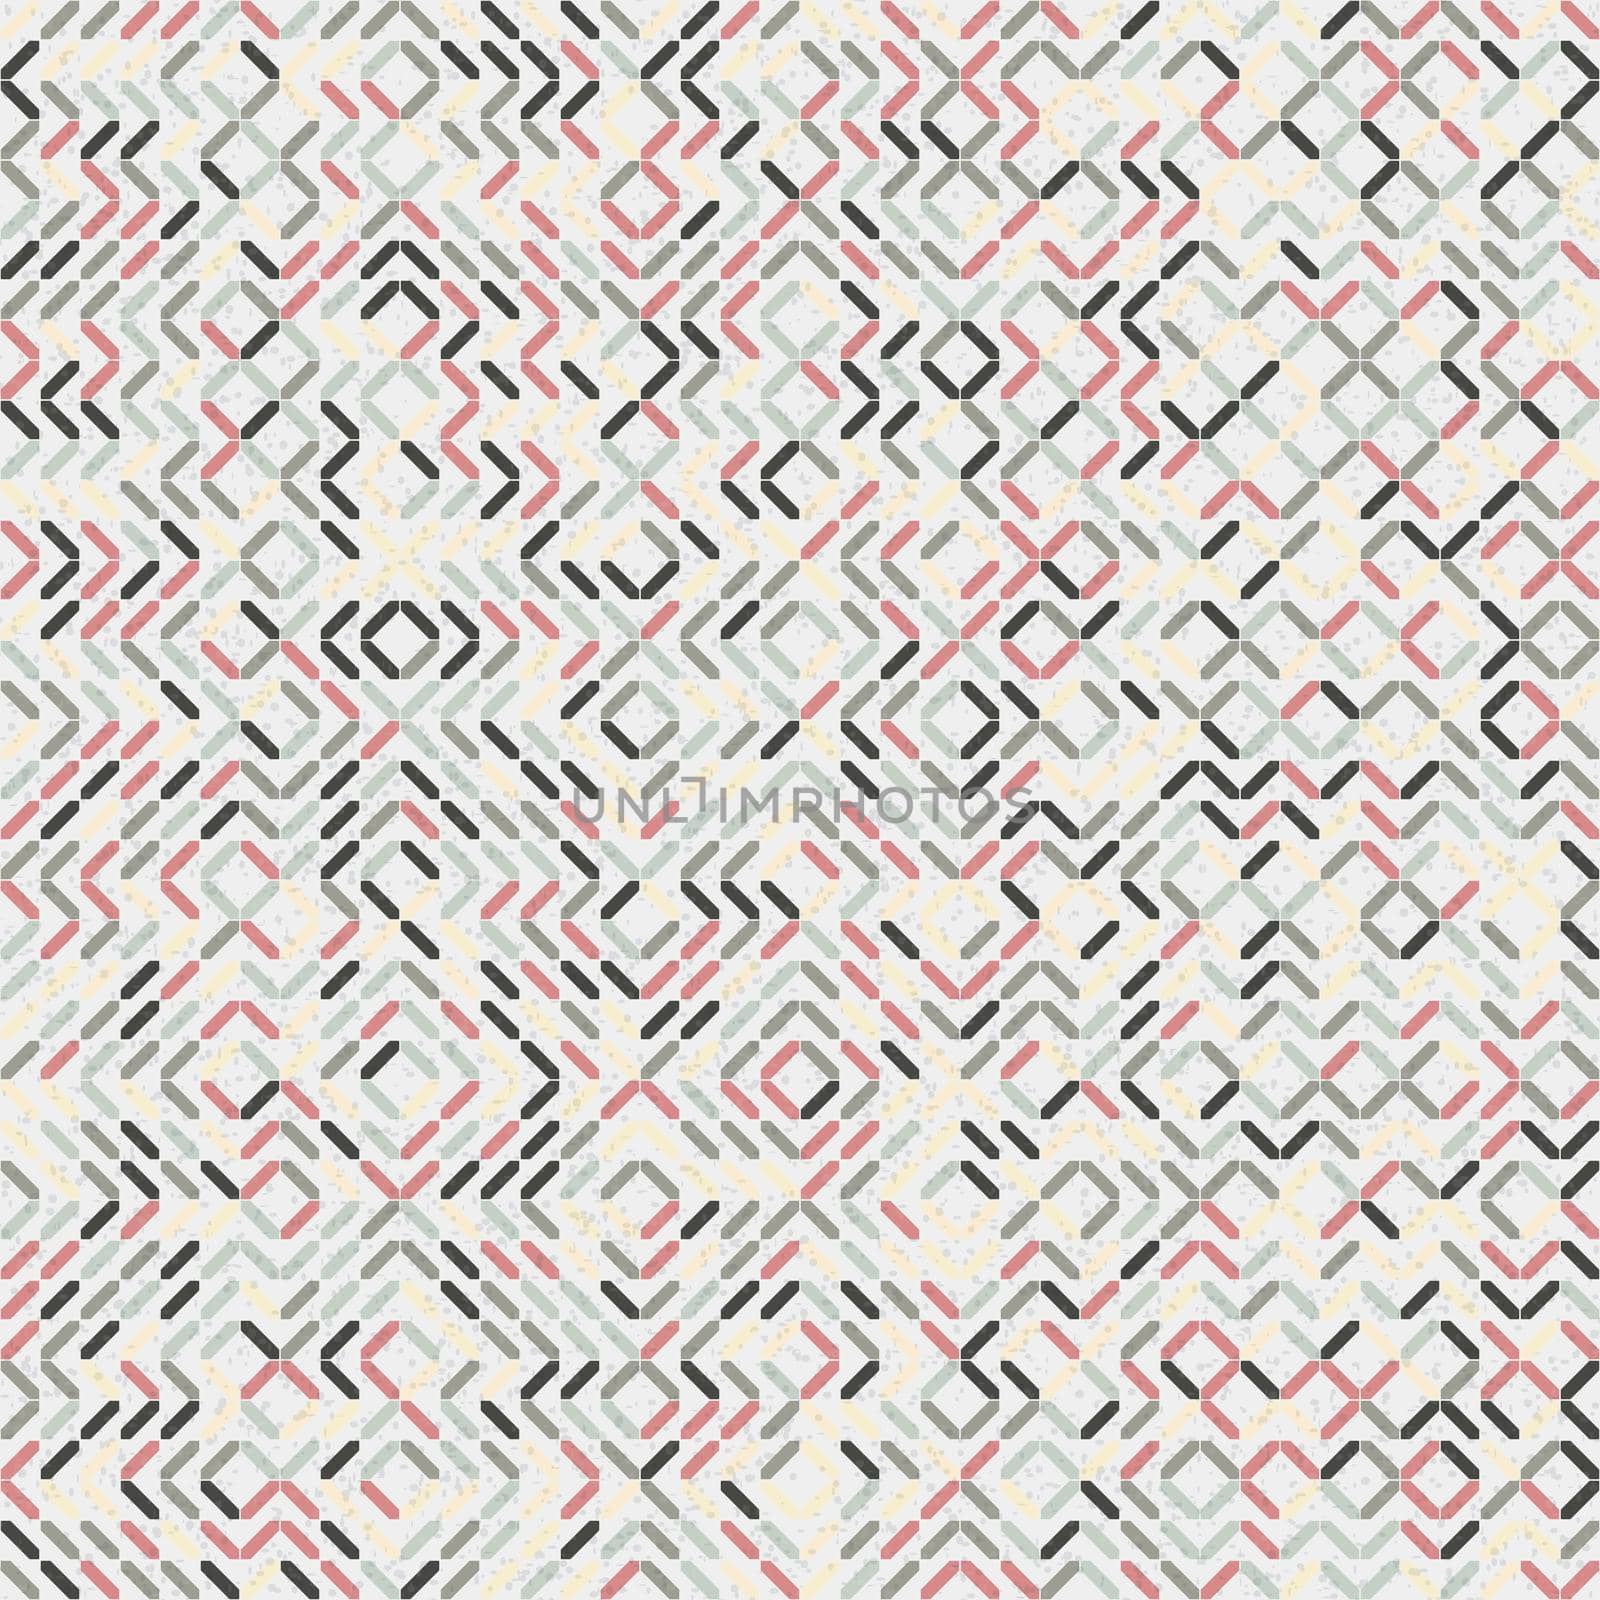 Abstract Geometric Pattern generative computational art illustration by Yuriy_Vlasenko